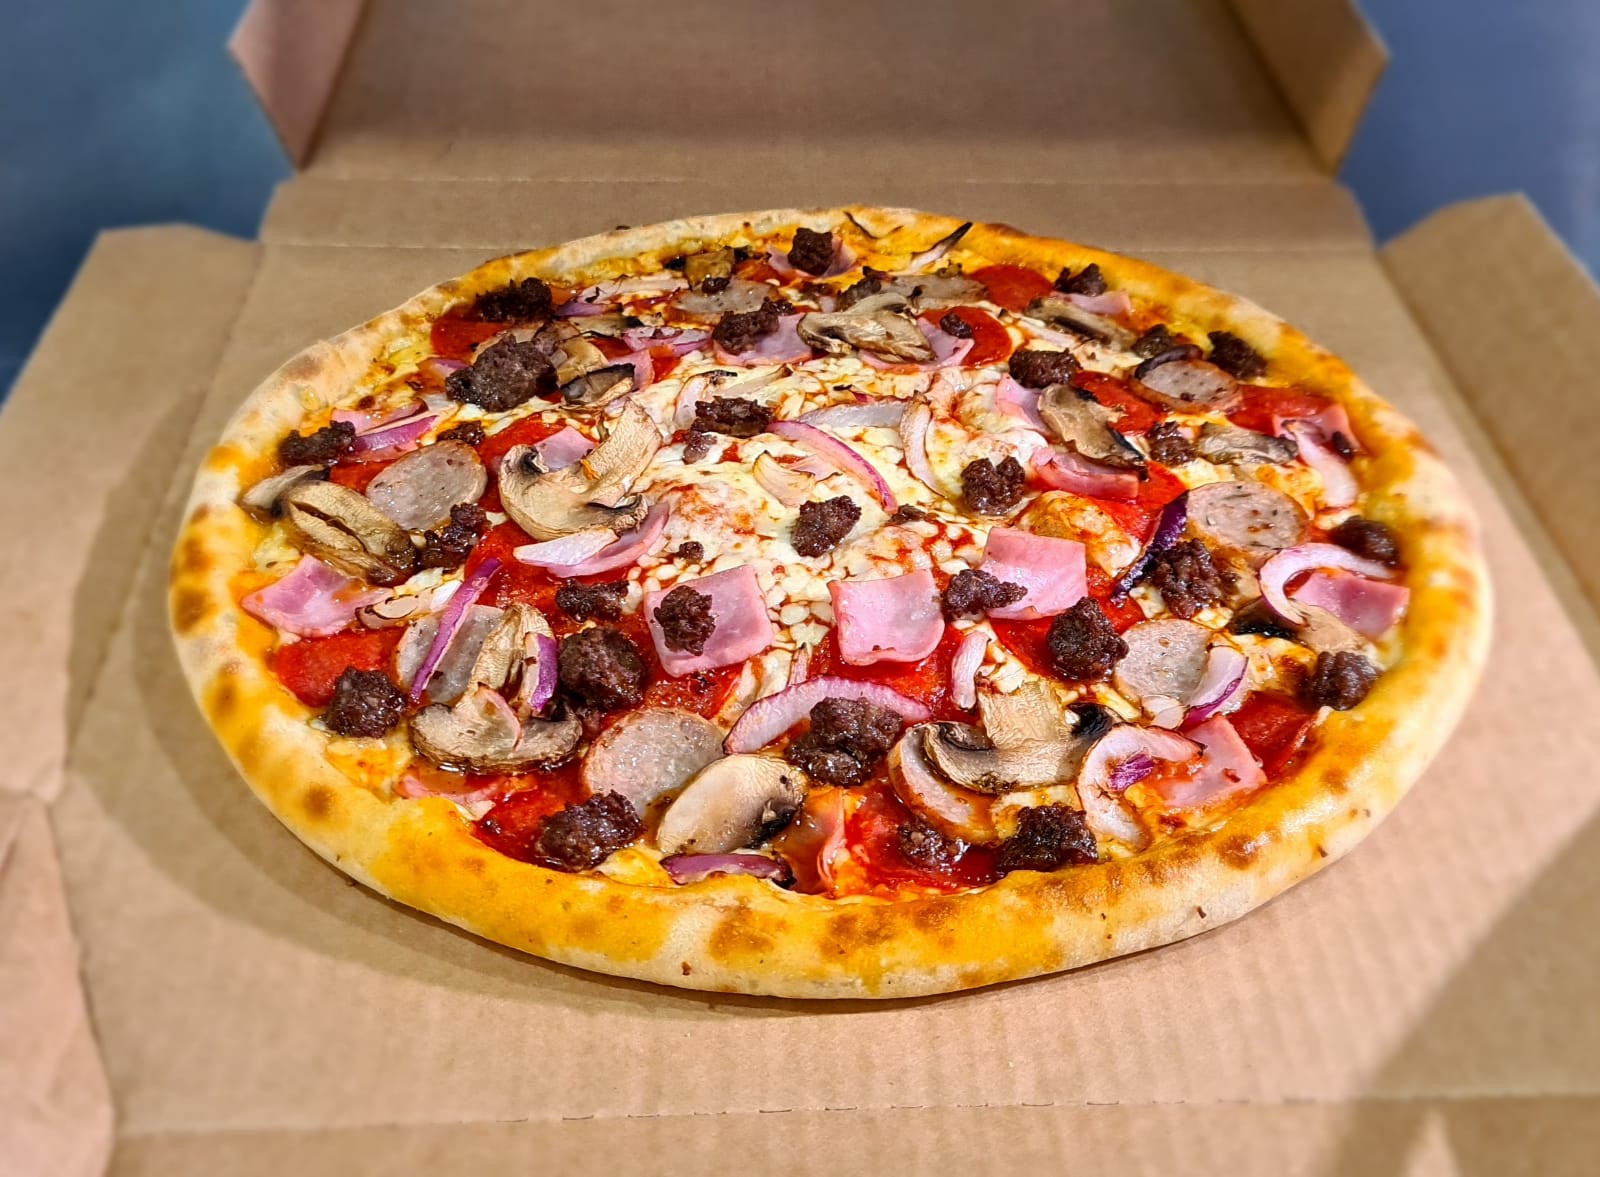 Domino's Pizza - Ammanford Ammanford 01269 594443